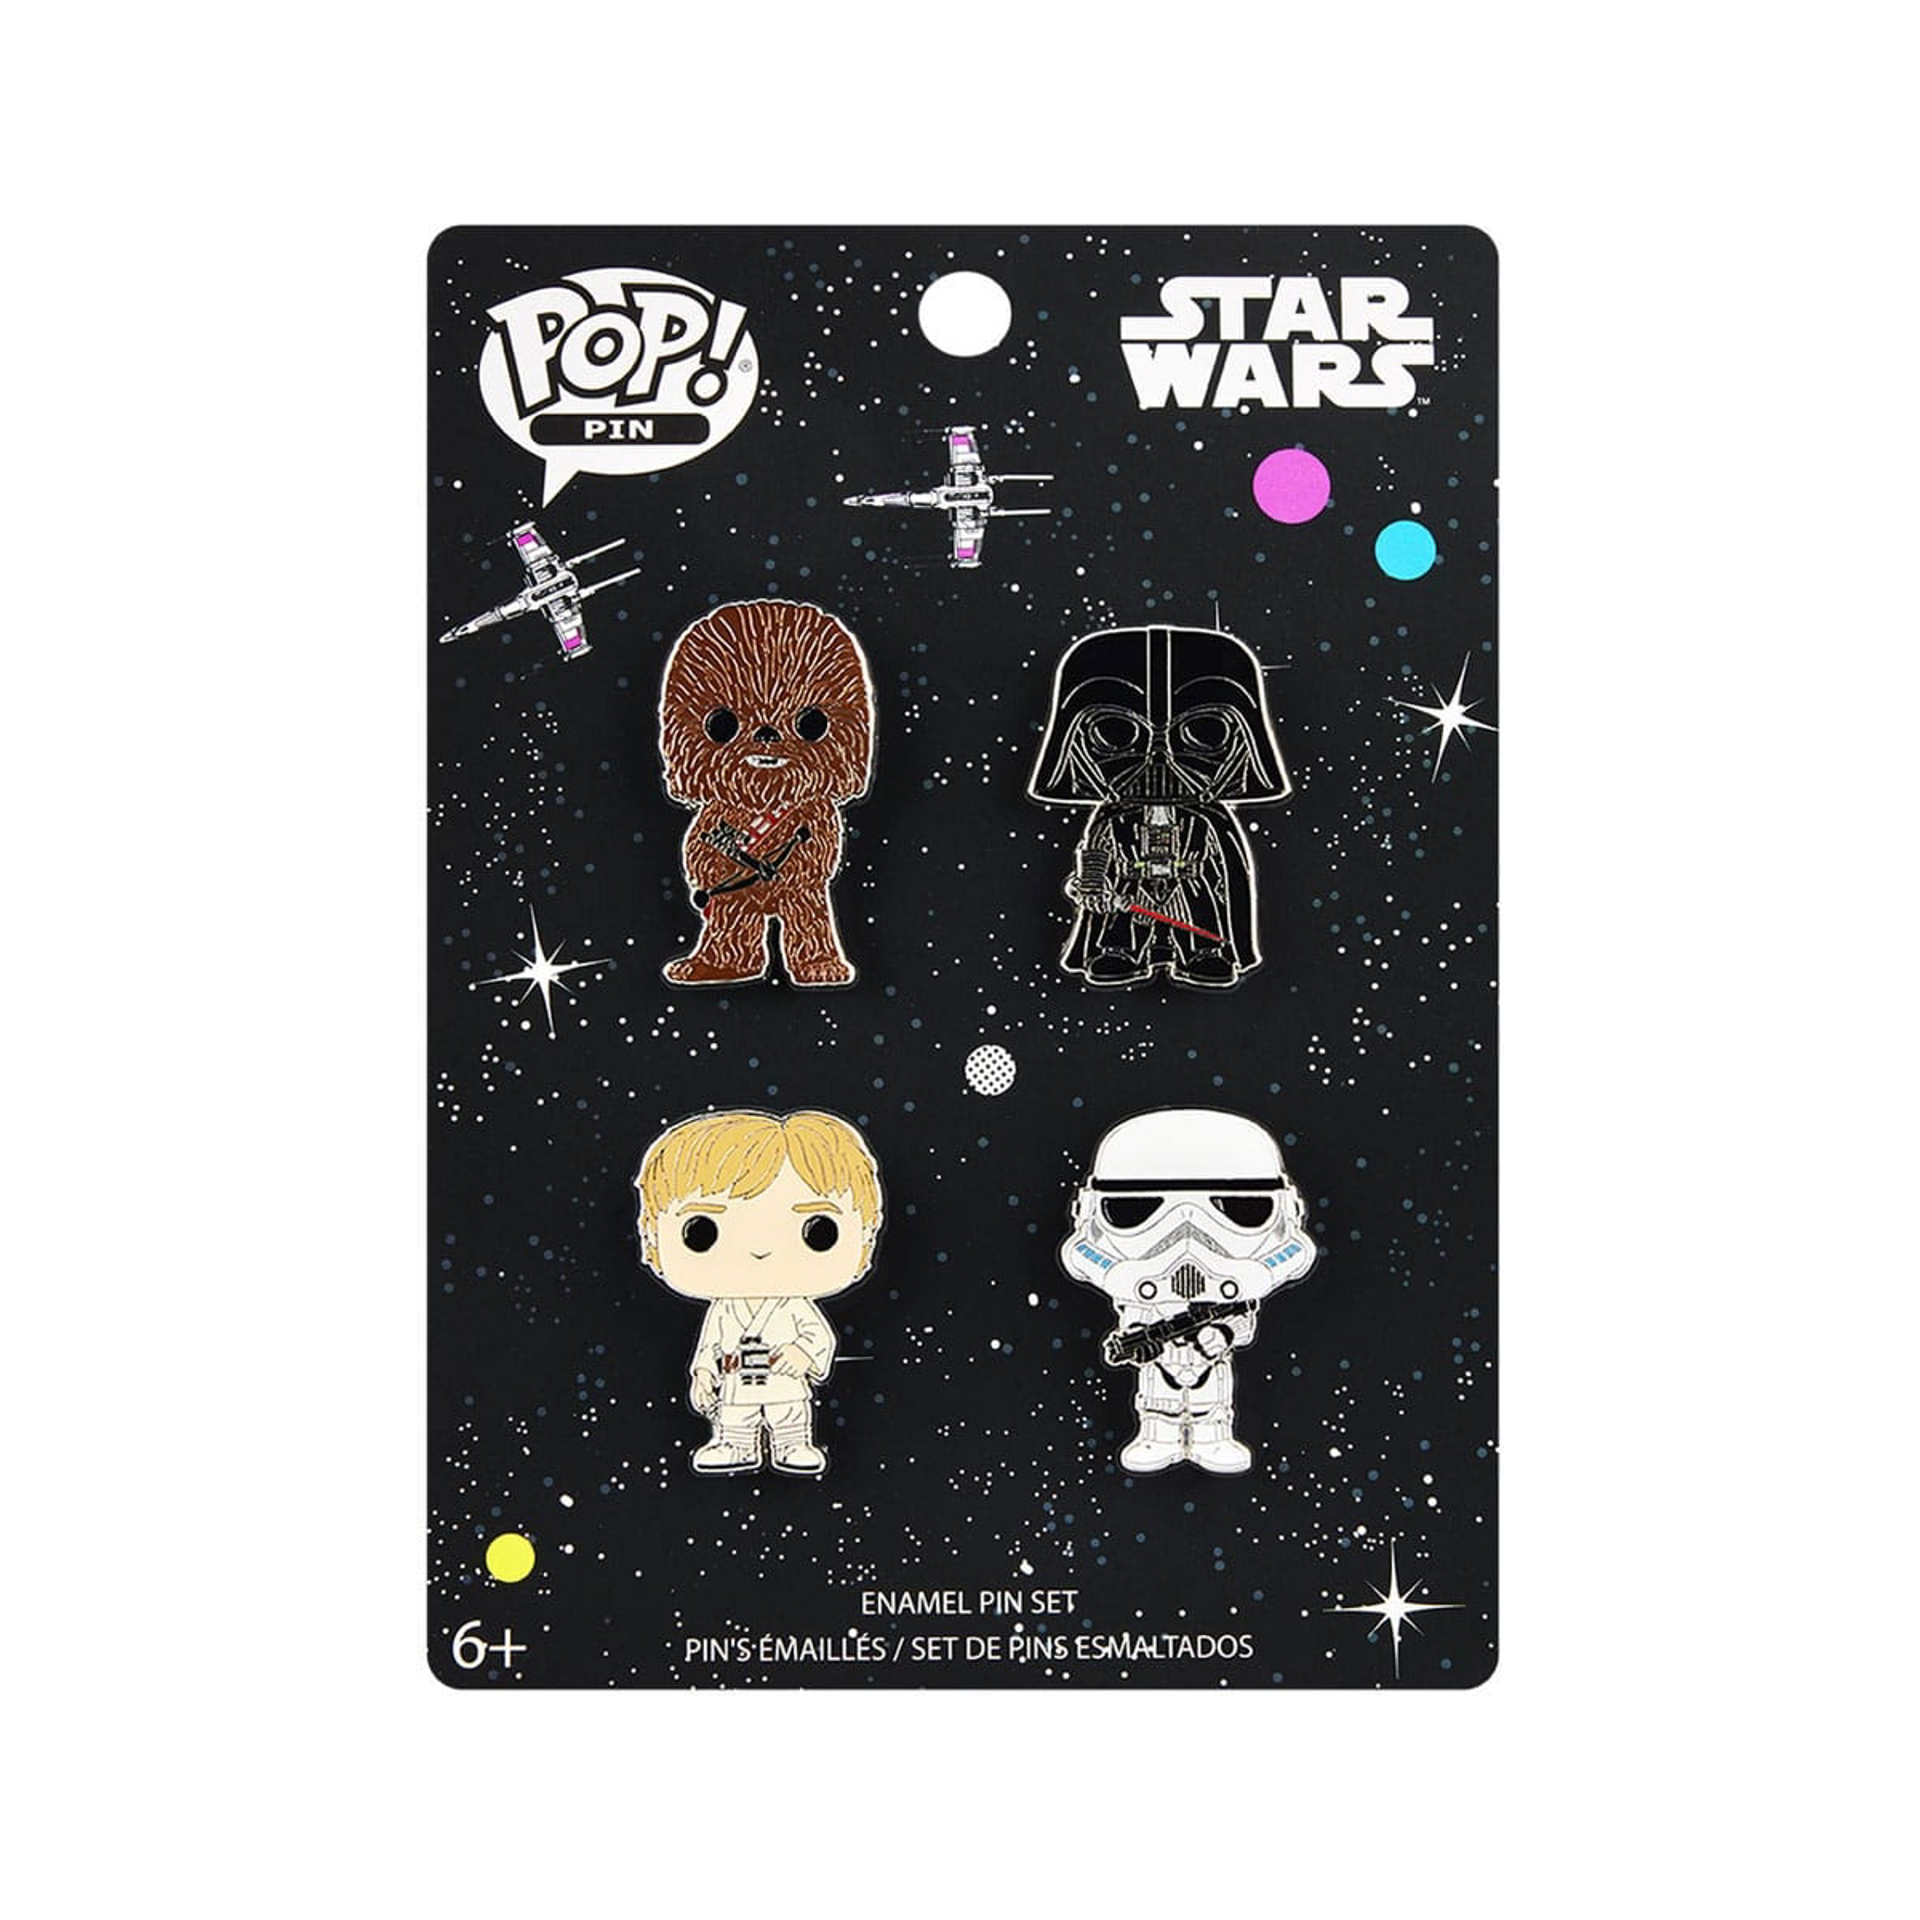 Funko Pop! Pin: 4-Pack: Star Wars - Luke Skywalker / Chewbacca / Darth Vader / Stormtrooper Enamel Pin Set